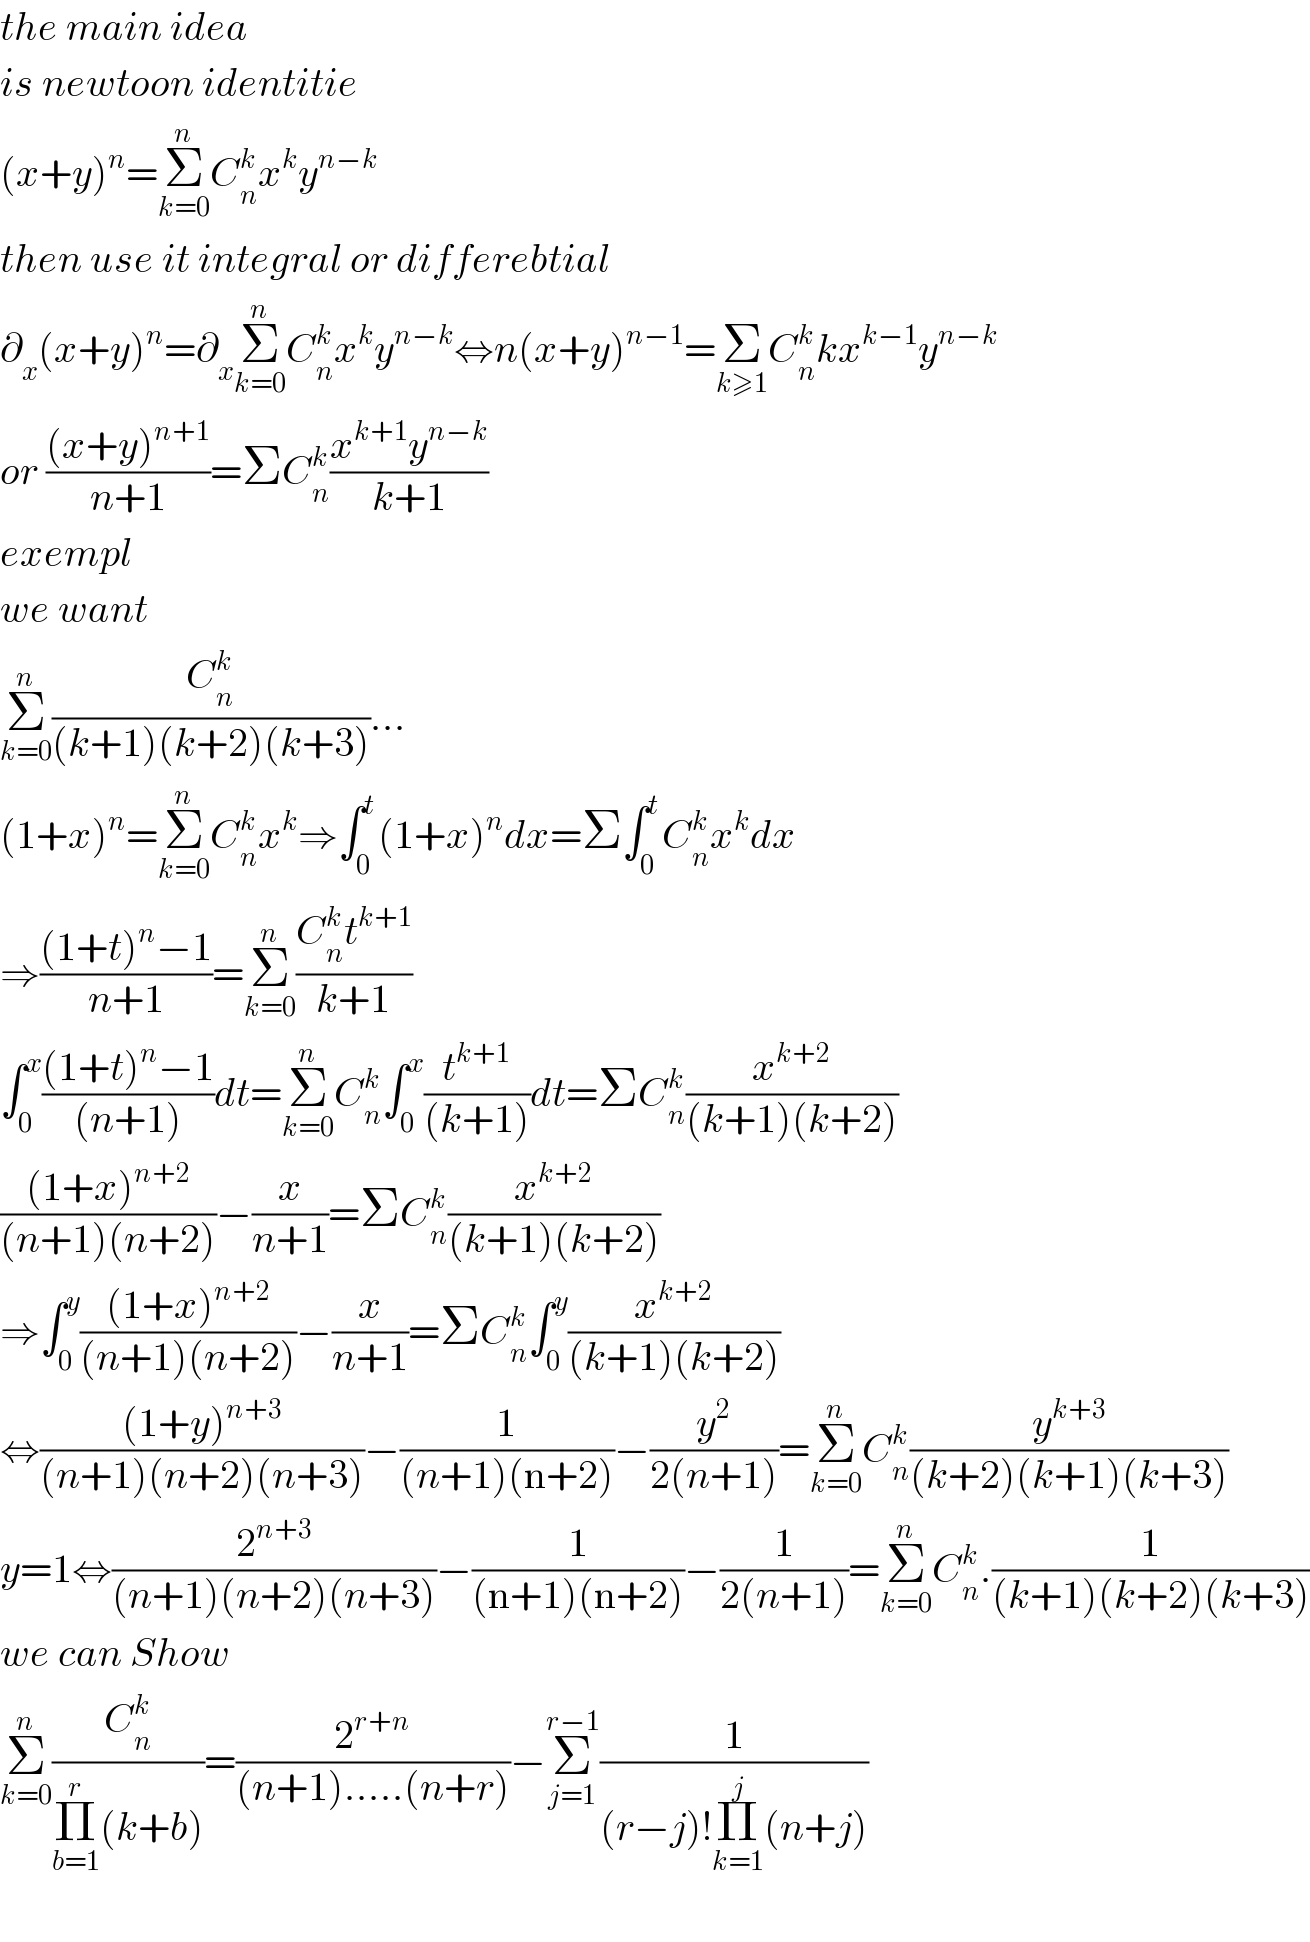 the main idea  is newtoon identitie  (x+y)^n =Σ_(k=0) ^n C_n ^k x^k y^(n−k)   then use it integral or differebtial  ∂_x (x+y)^n =∂_x Σ_(k=0) ^n C_n ^k x^k y^(n−k) ⇔n(x+y)^(n−1) =Σ_(k≥1) C_n ^k kx^(k−1) y^(n−k)   or (((x+y)^(n+1) )/(n+1))=ΣC_n ^k ((x^(k+1) y^(n−k) )/(k+1))  exempl   we want  Σ_(k=0) ^n (C_n ^k /((k+1)(k+2)(k+3)))...  (1+x)^n =Σ_(k=0) ^n C_n ^k x^k ⇒∫_0 ^t (1+x)^n dx=Σ∫_0 ^t C_n ^k x^k dx  ⇒(((1+t)^n −1)/(n+1))=Σ_(k=0) ^n ((C_n ^k t^(k+1) )/(k+1))  ∫_0 ^x (((1+t)^n −1)/((n+1)))dt=Σ_(k=0) ^n C_n ^k ∫_0 ^x (t^(k+1) /((k+1)))dt=ΣC_n ^k (x^(k+2) /((k+1)(k+2)))  (((1+x)^(n+2) )/((n+1)(n+2)))−(x/(n+1))=ΣC_n ^k (x^(k+2) /((k+1)(k+2)))  ⇒∫_0 ^y (((1+x)^(n+2) )/((n+1)(n+2)))−(x/(n+1))=ΣC_n ^k ∫_0 ^y (x^(k+2) /((k+1)(k+2)))  ⇔(((1+y)^(n+3) )/((n+1)(n+2)(n+3)))−(1/((n+1)(n+2)))−(y^2 /(2(n+1)))=Σ_(k=0) ^n C_n ^k (y^(k+3) /((k+2)(k+1)(k+3)))  y=1⇔(2^(n+3) /((n+1)(n+2)(n+3)))−(1/((n+1)(n+2)))−(1/(2(n+1)))=Σ_(k=0) ^n C_n ^k .(1/((k+1)(k+2)(k+3)))  we can Show  Σ_(k=0) ^n (C_n ^k /(Π_(b=1) ^r (k+b)))=(2^(r+n) /((n+1).....(n+r)))−Σ_(j=1) ^(r−1) (1/((r−j)!Π_(k=1) ^j (n+j)))    